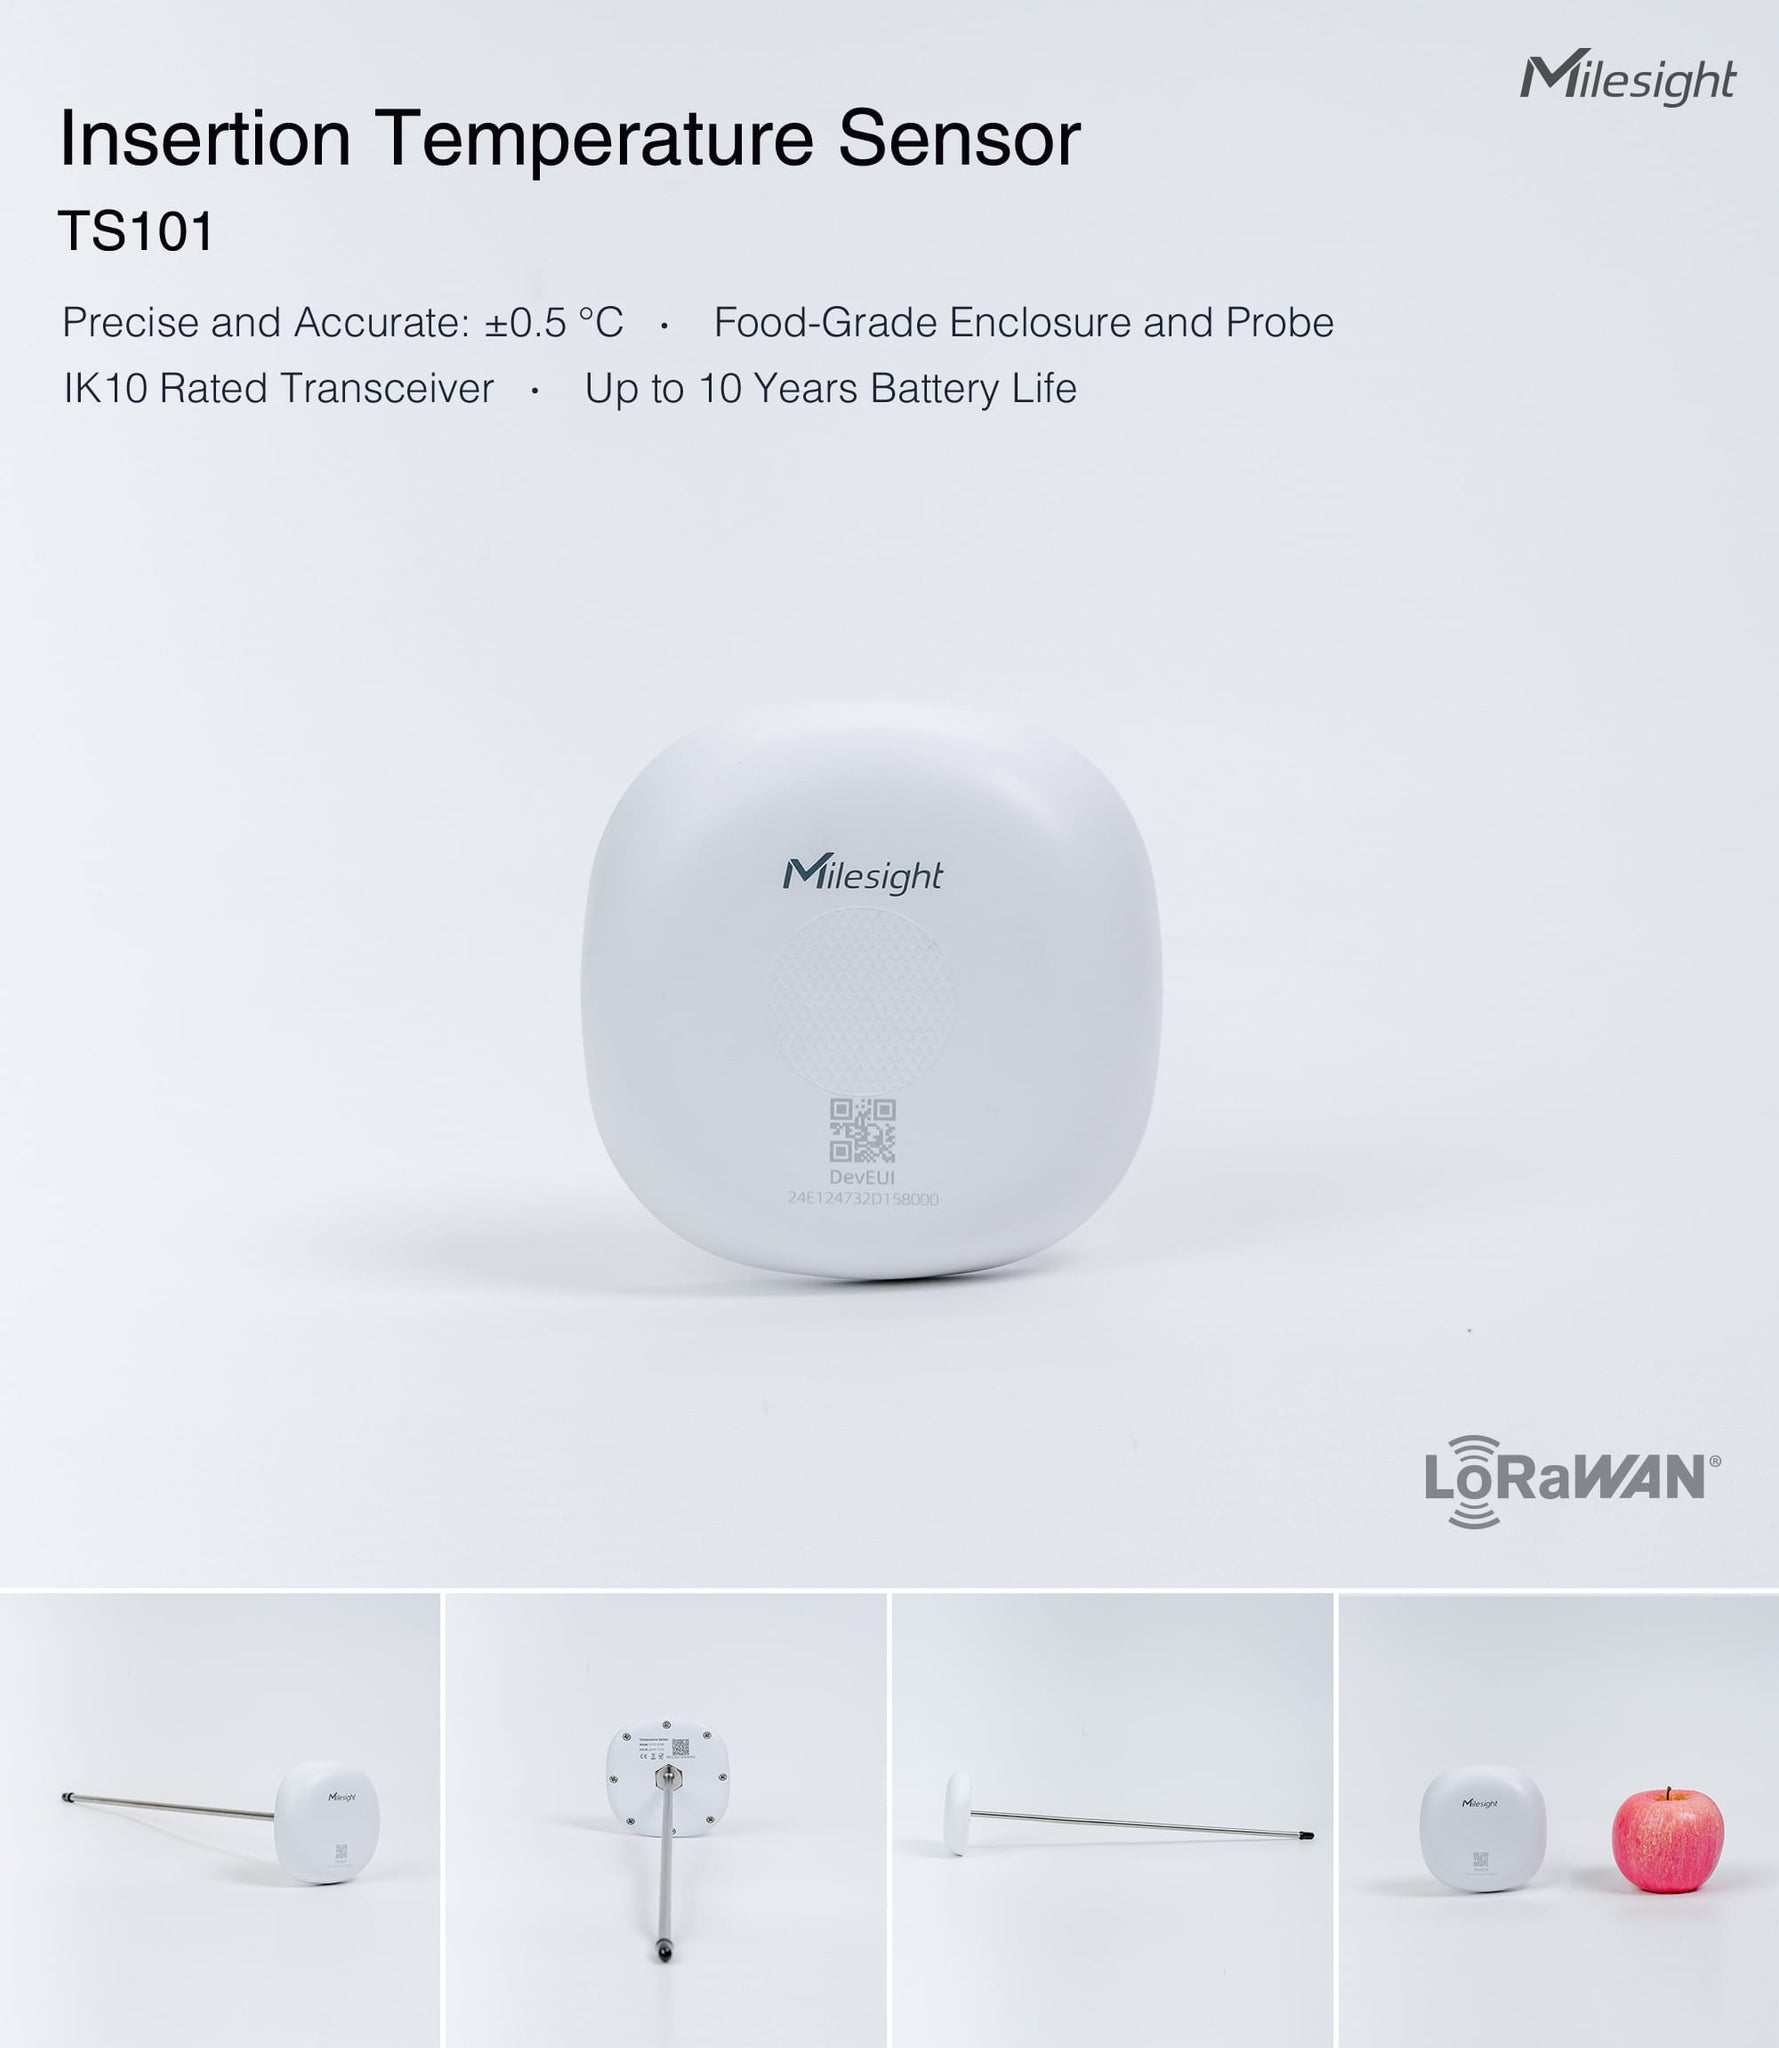 Insertion Temperature Sensor TS101